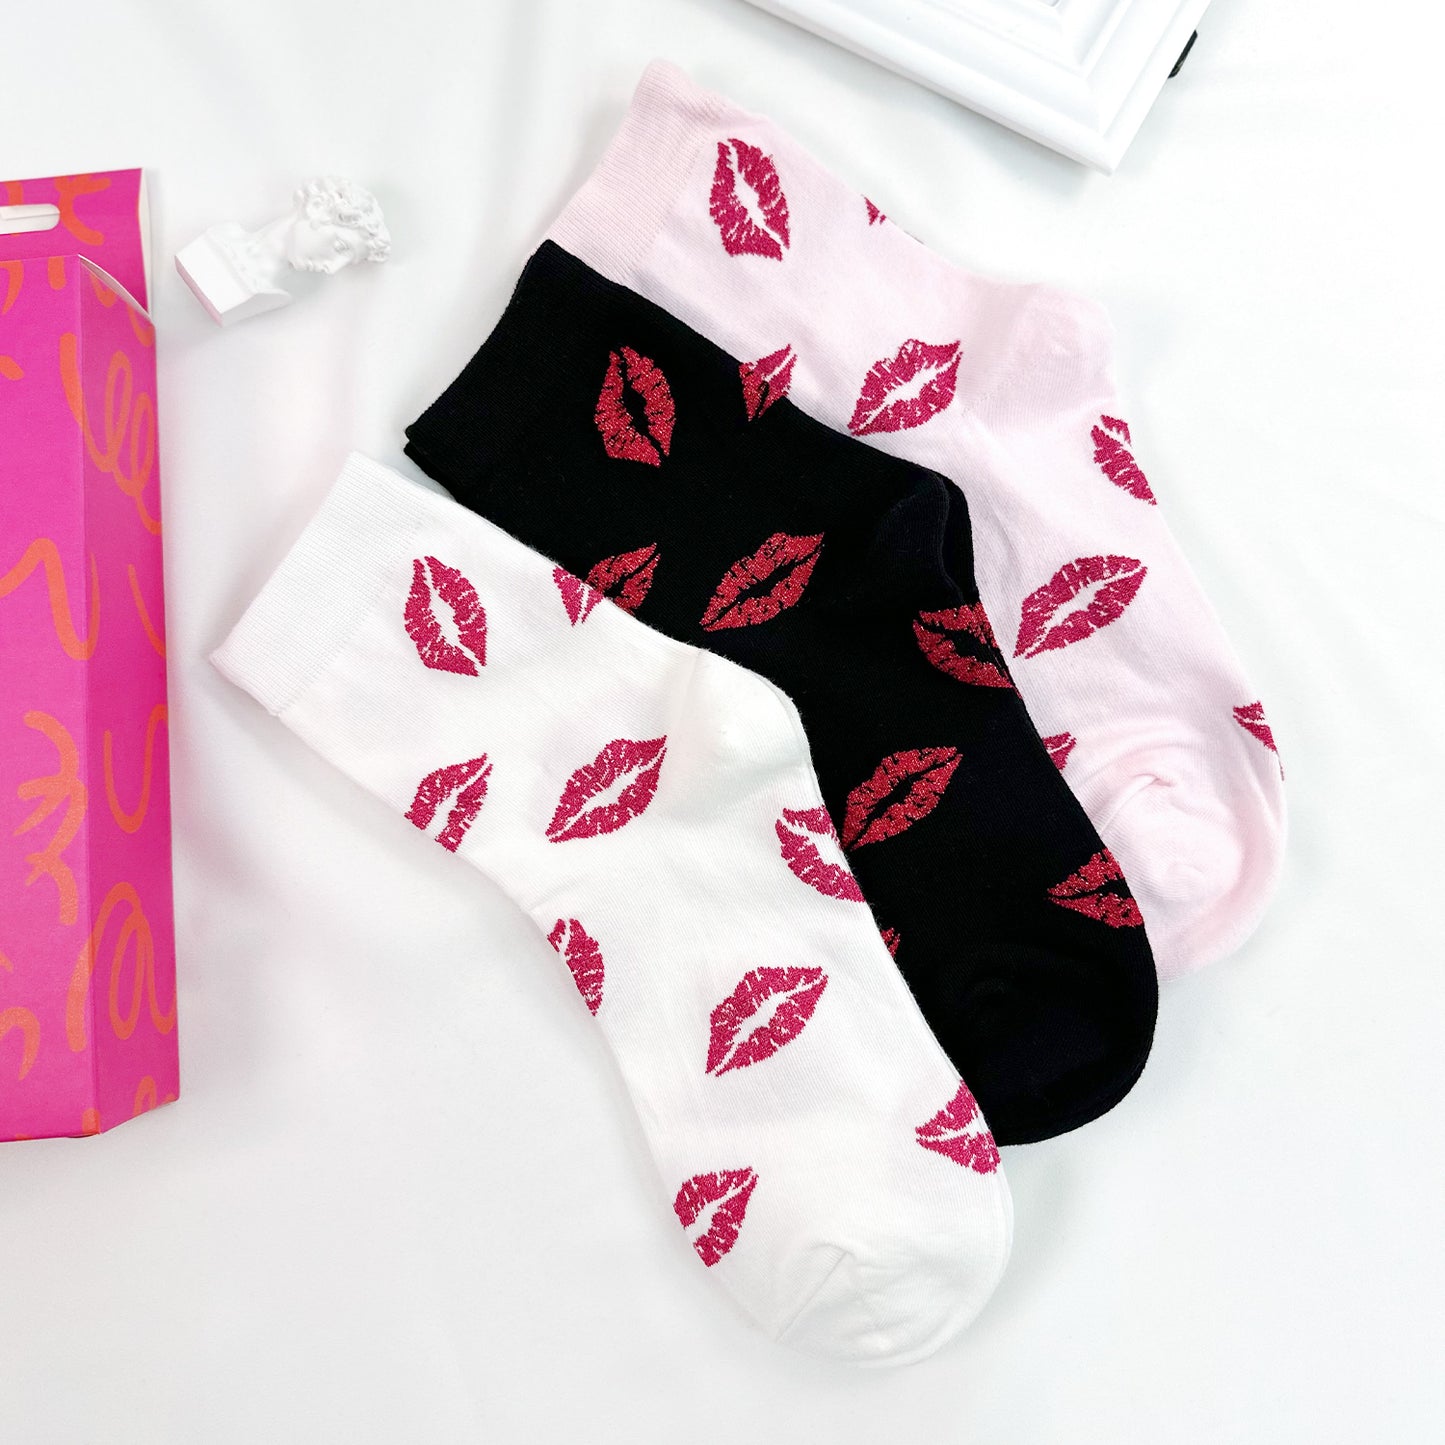 Women's Crew Kiss Socks